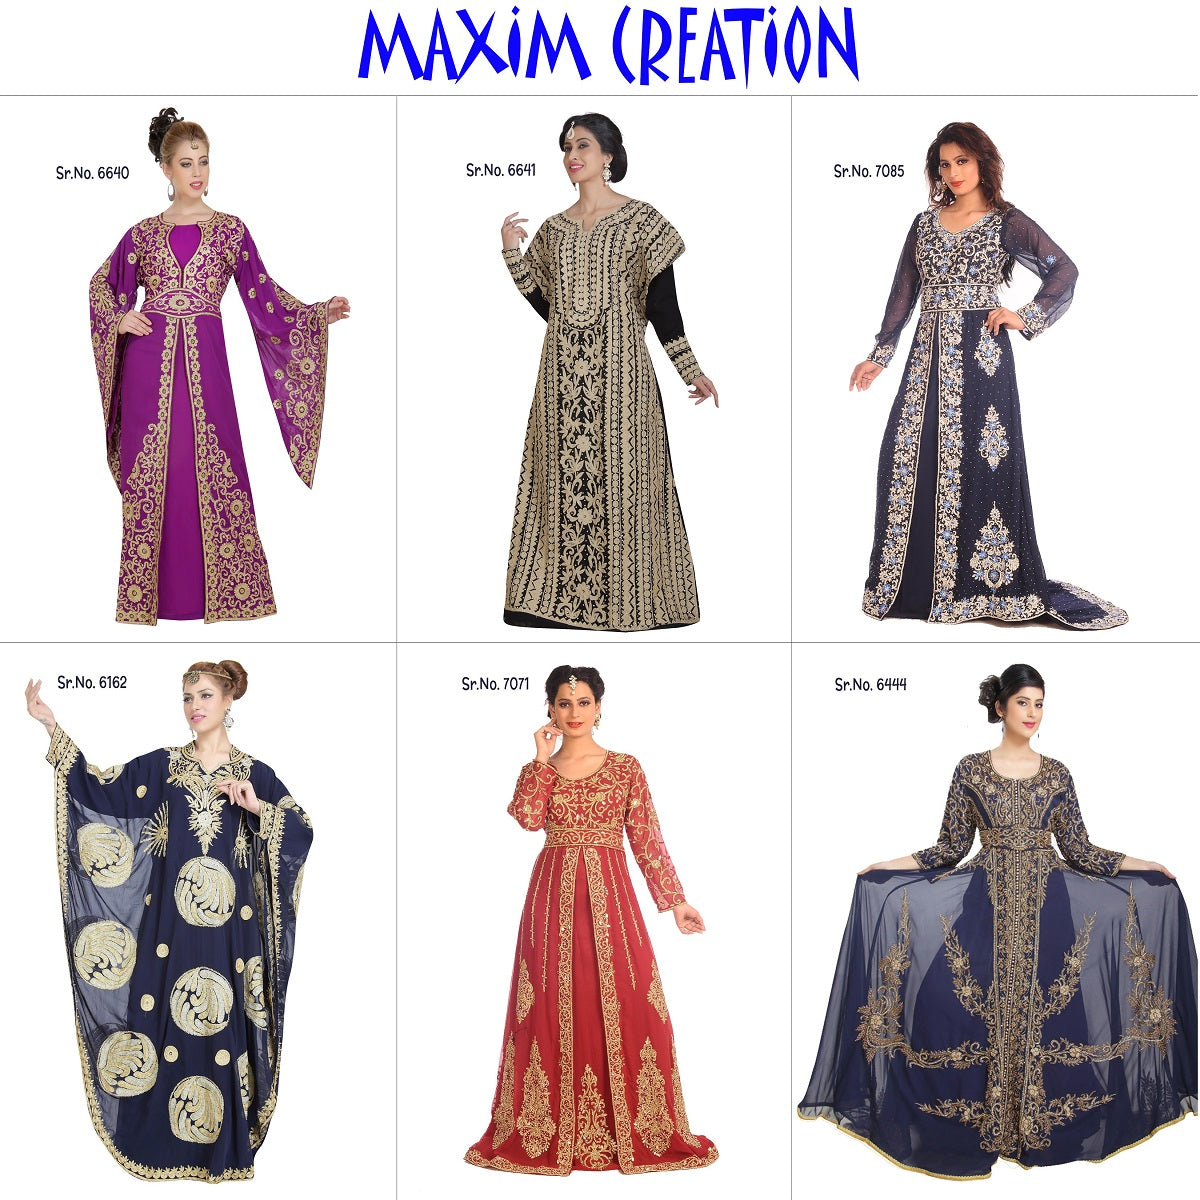 Royal Blue Arabian Digital Print Kaftan With Embroidered Belt - Maxim Creation